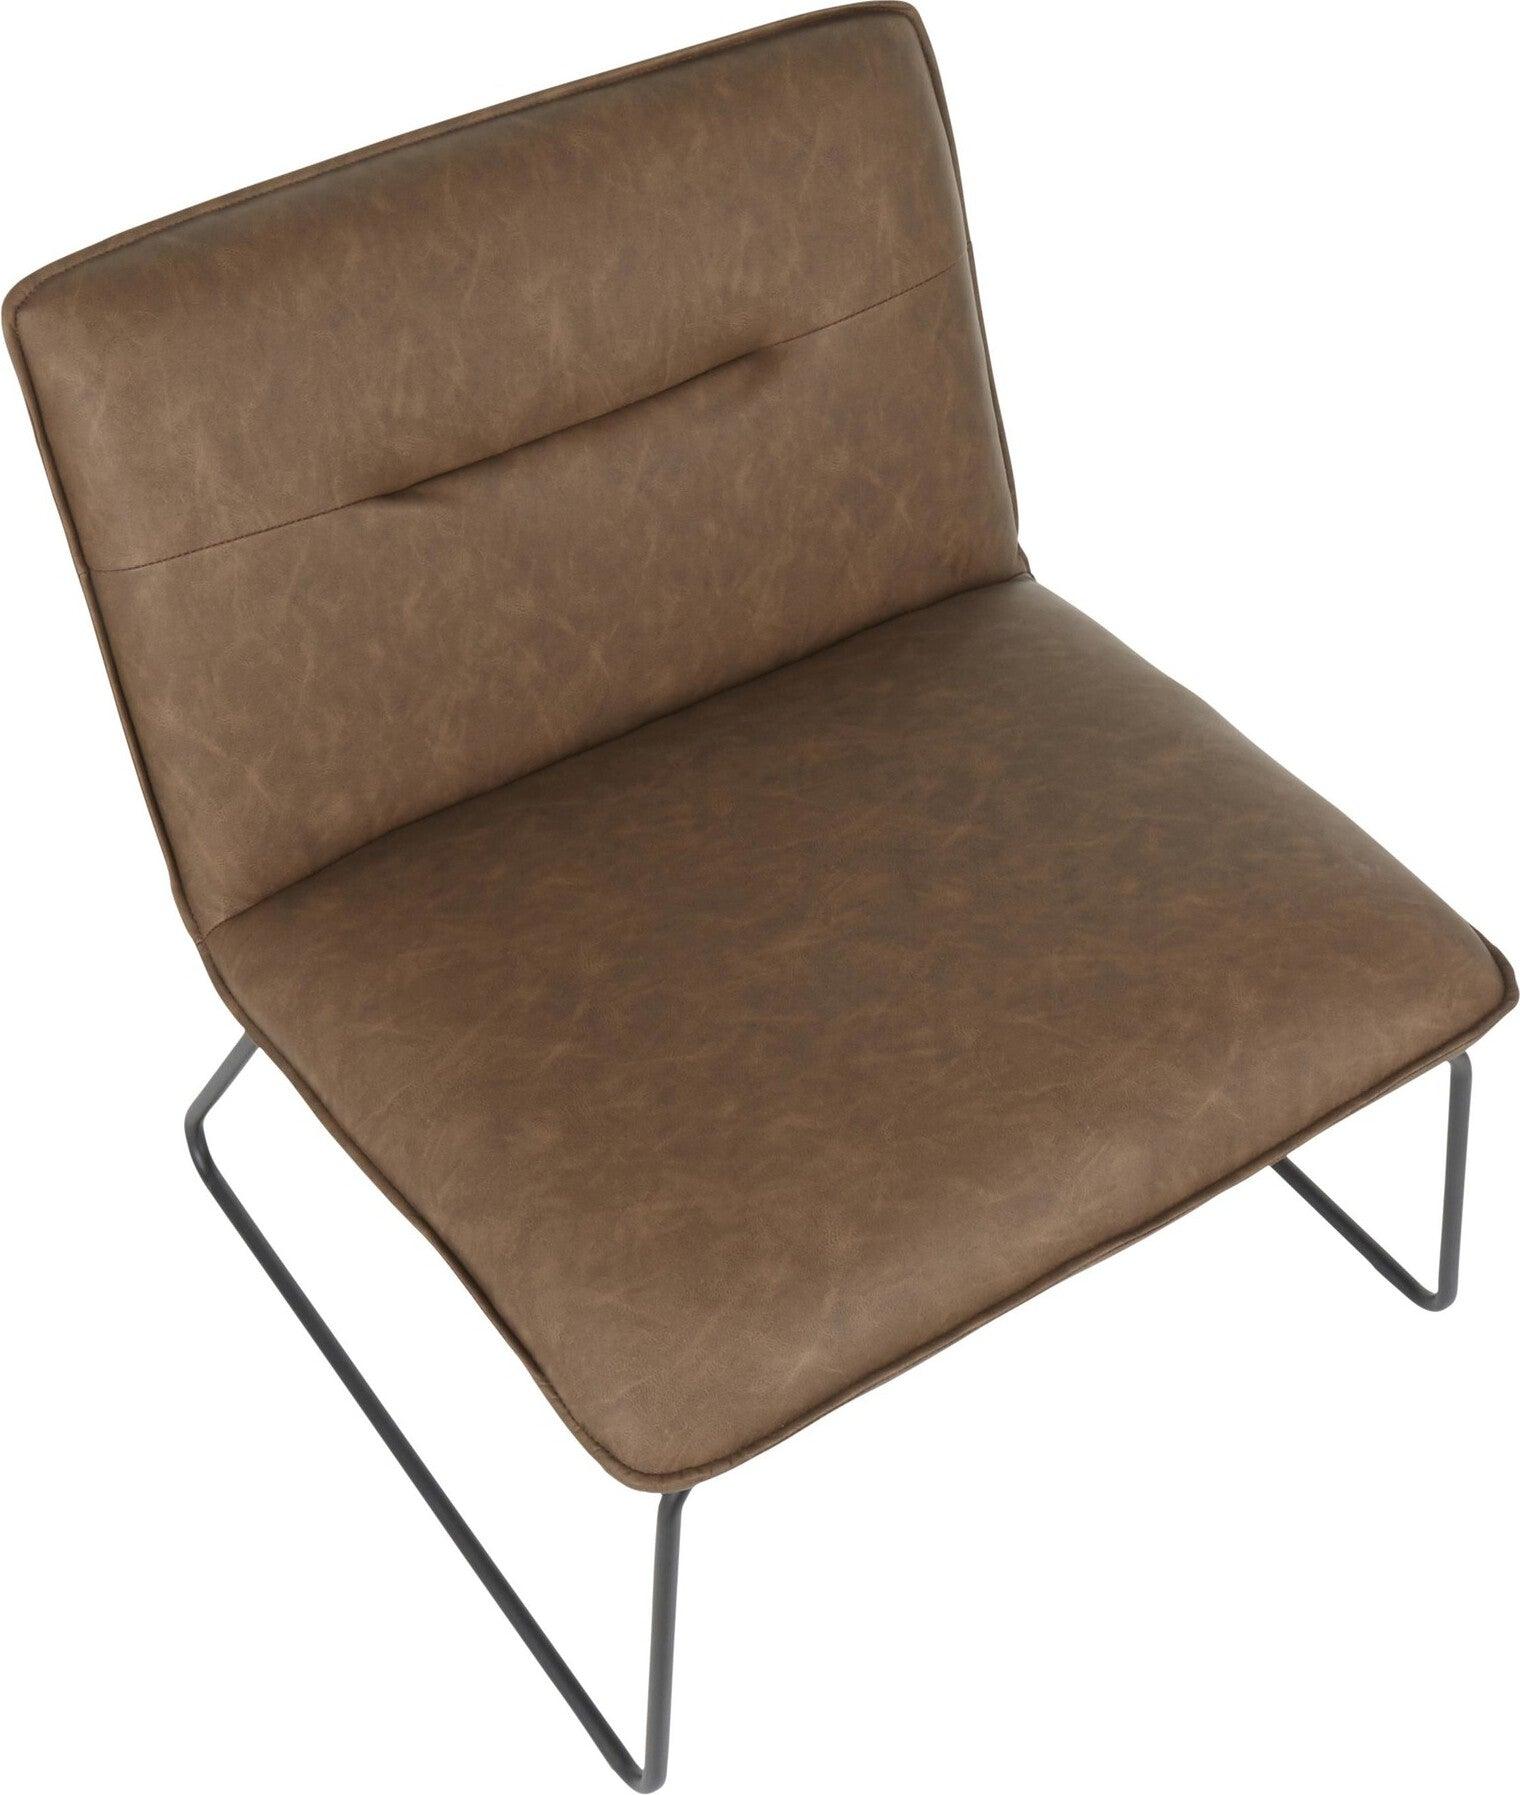 Lumisource Accent Chairs - Casper Accent Chair Black & Espresso